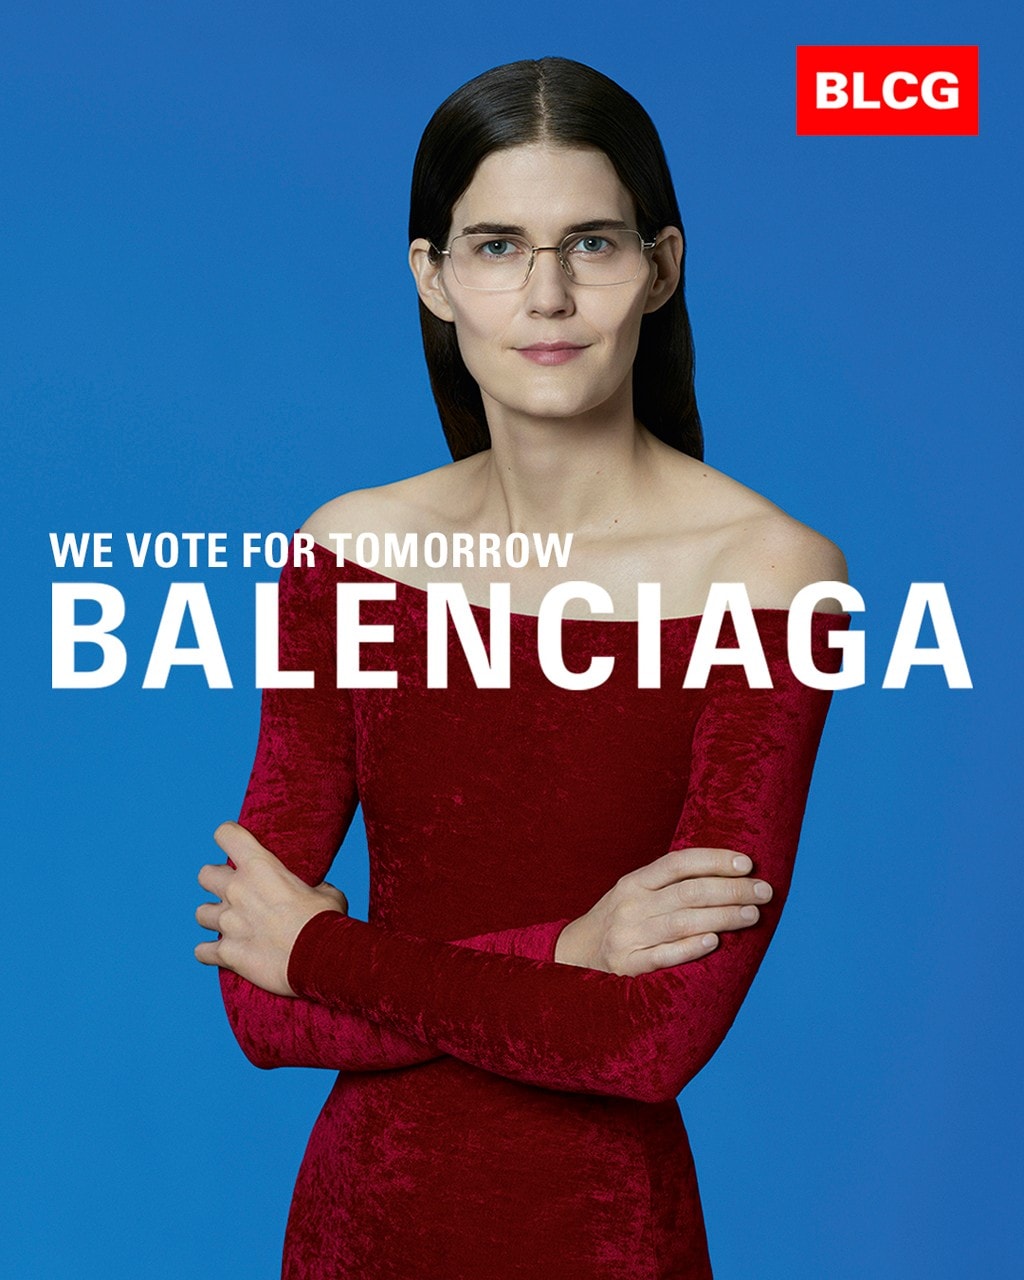 Balenciaga 2020 夏季系列宣傳大片正式發佈